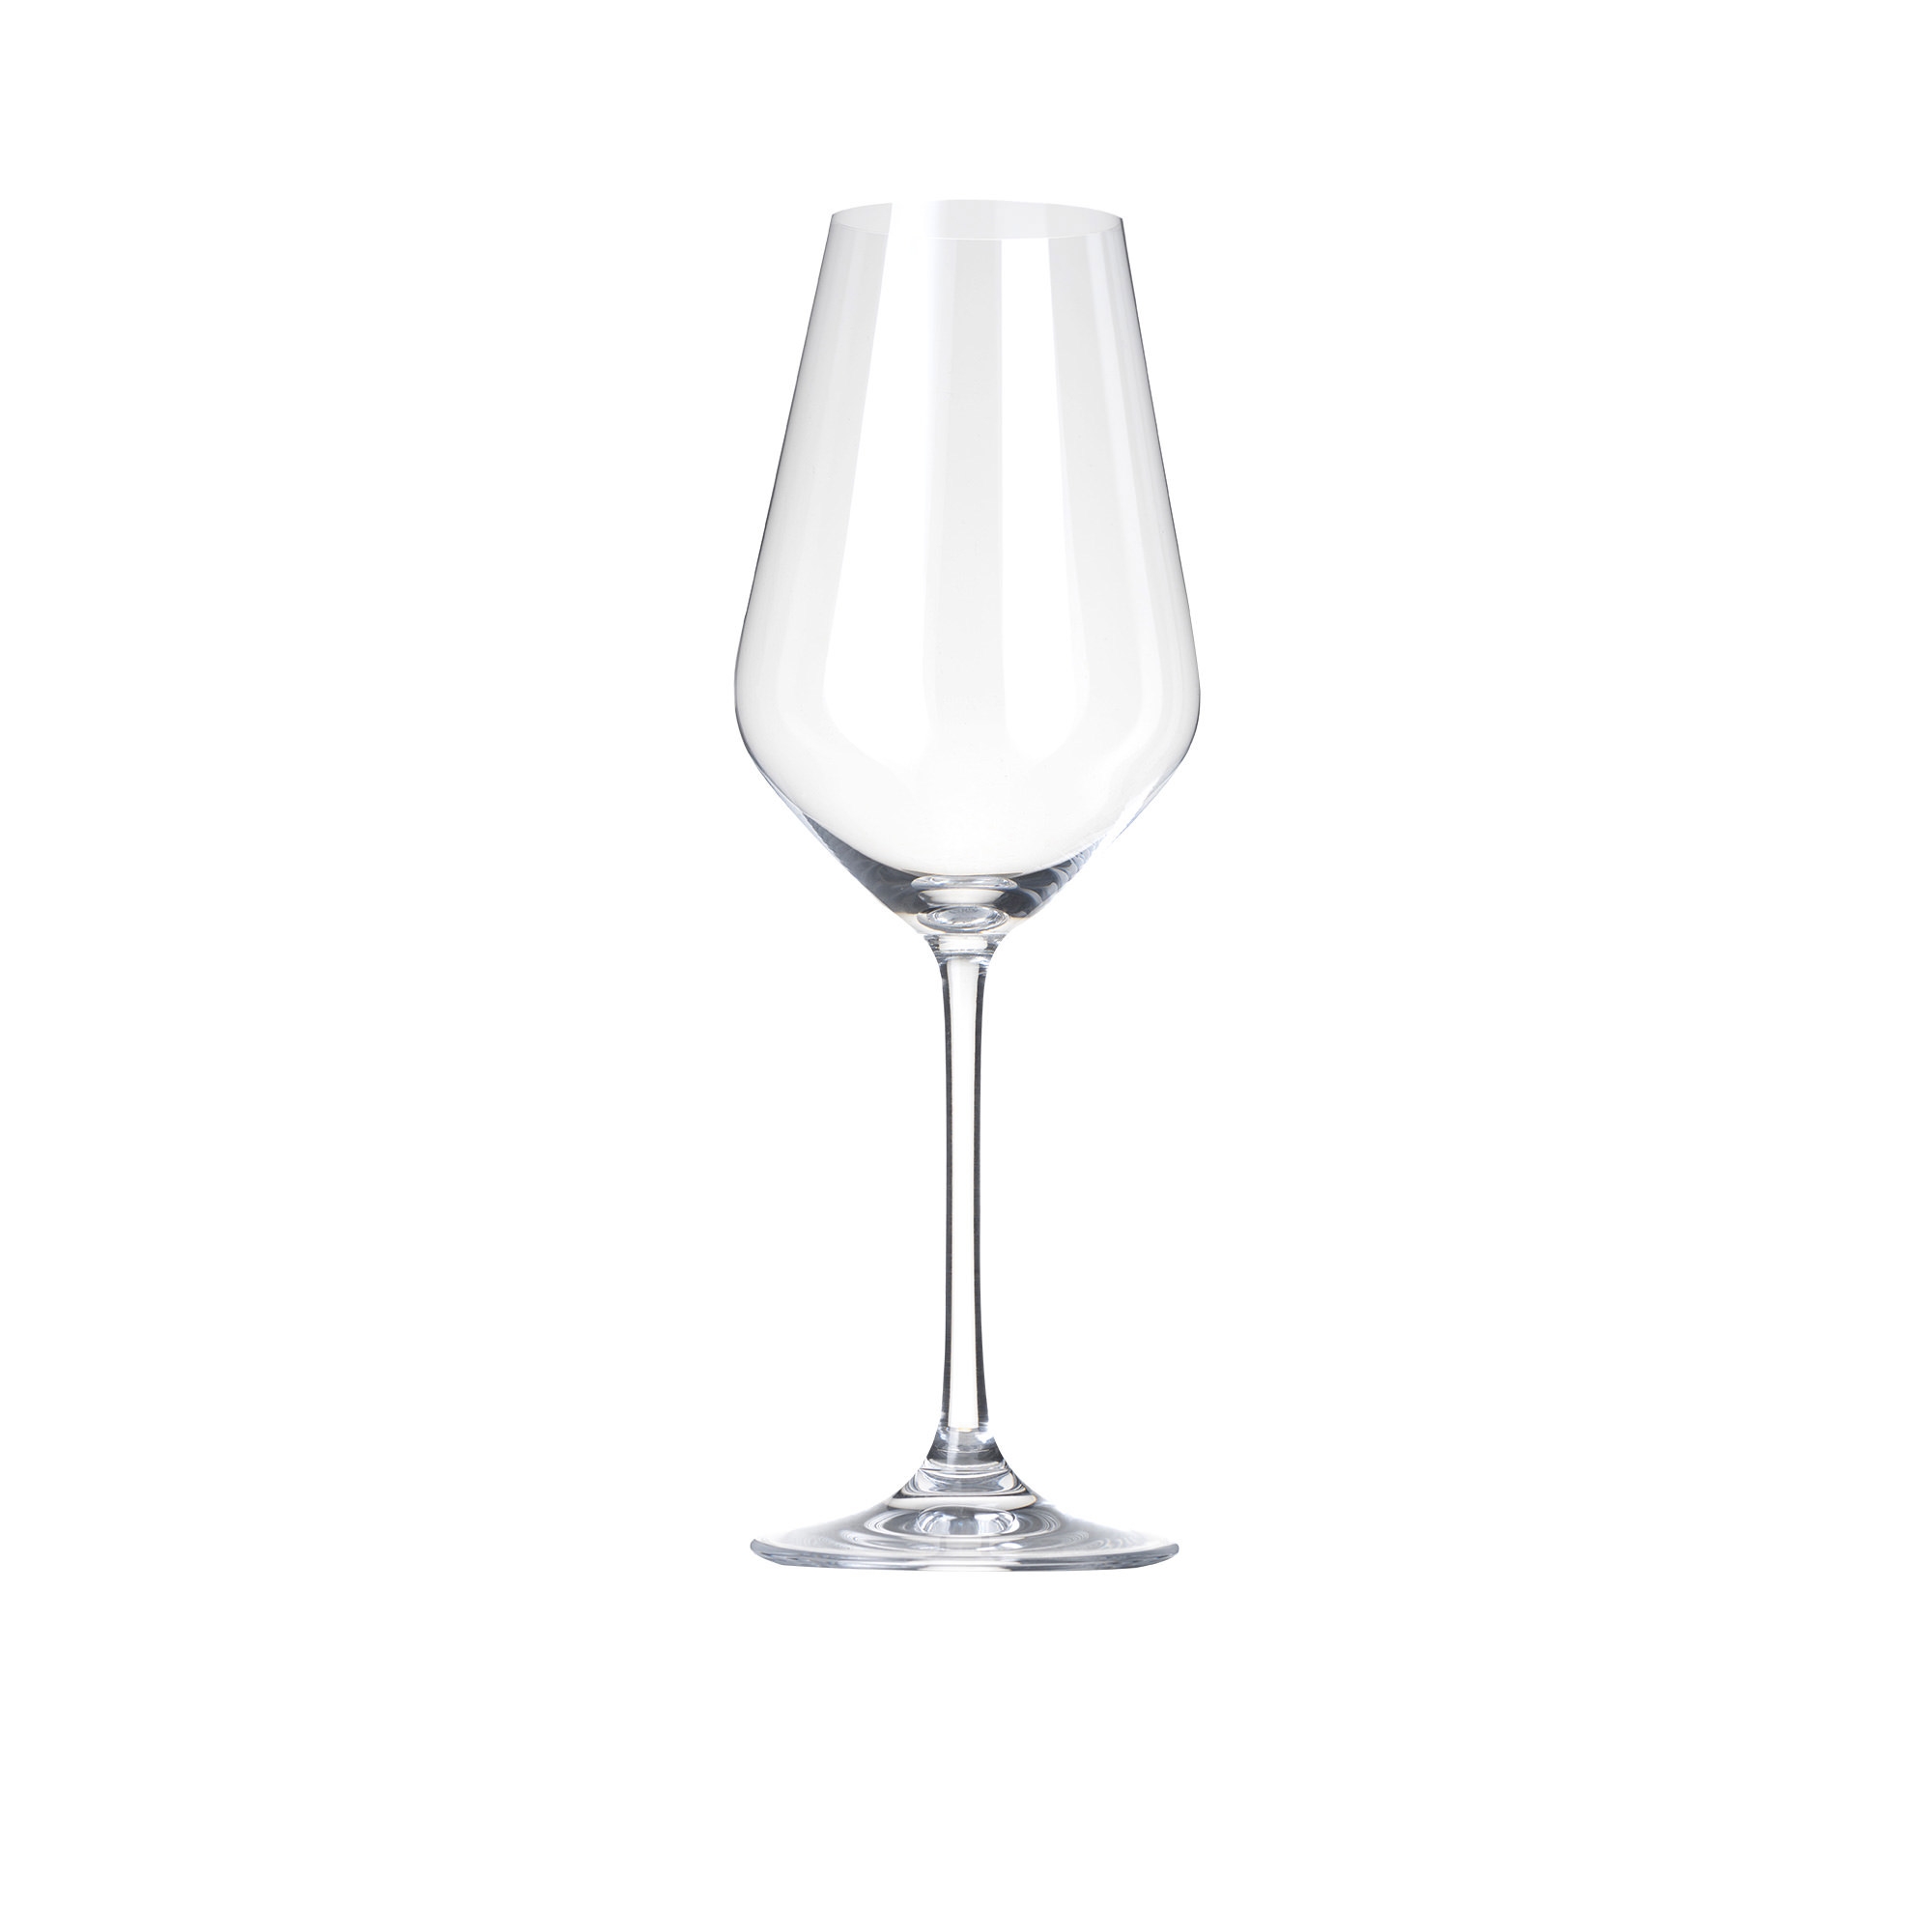 Le Creuset White Wine Glass 485ml Set of 4 Image 2